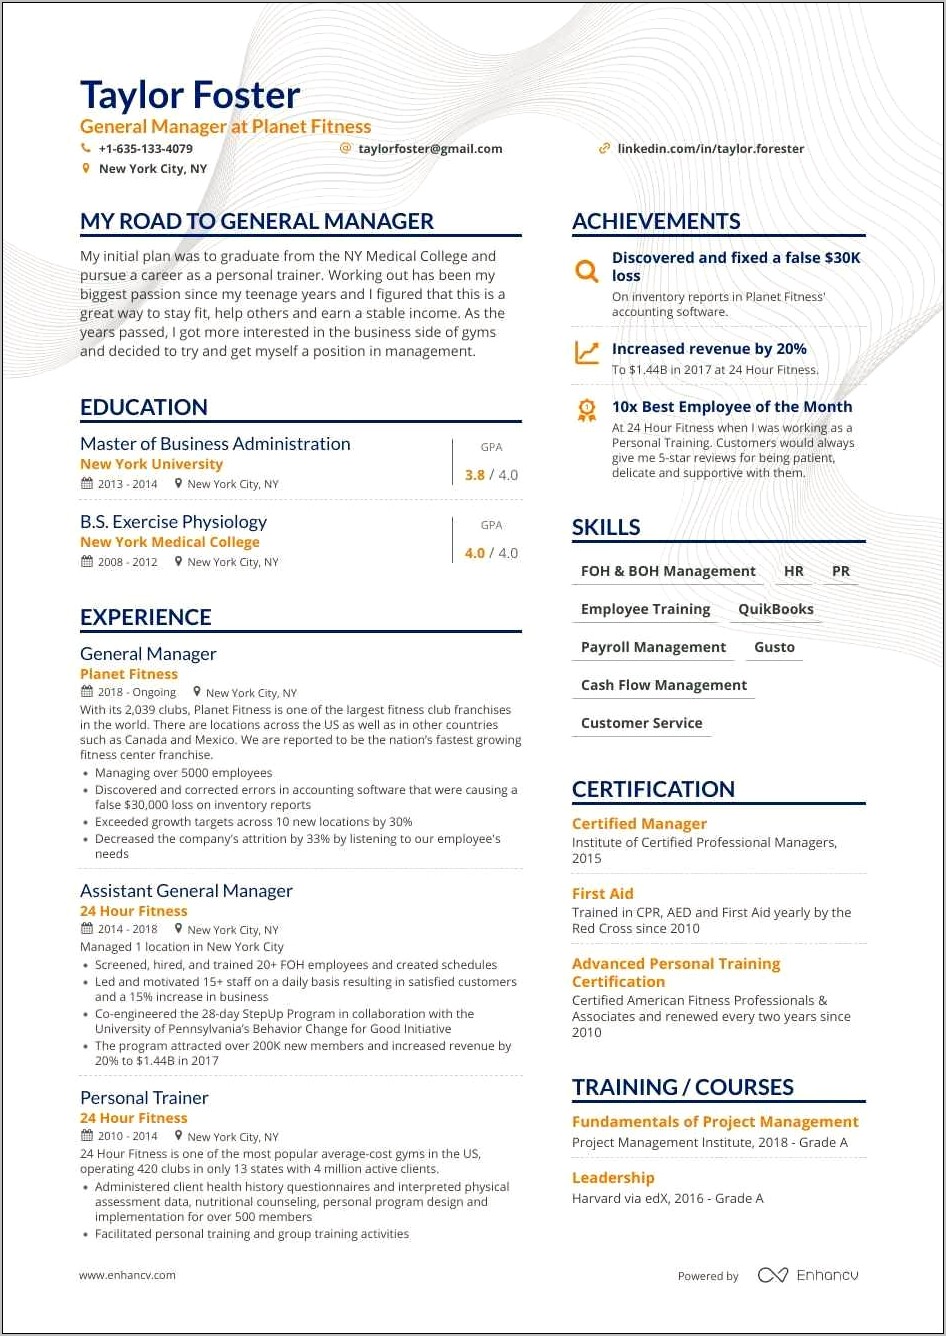 Avionics Manager Job Description For Resume